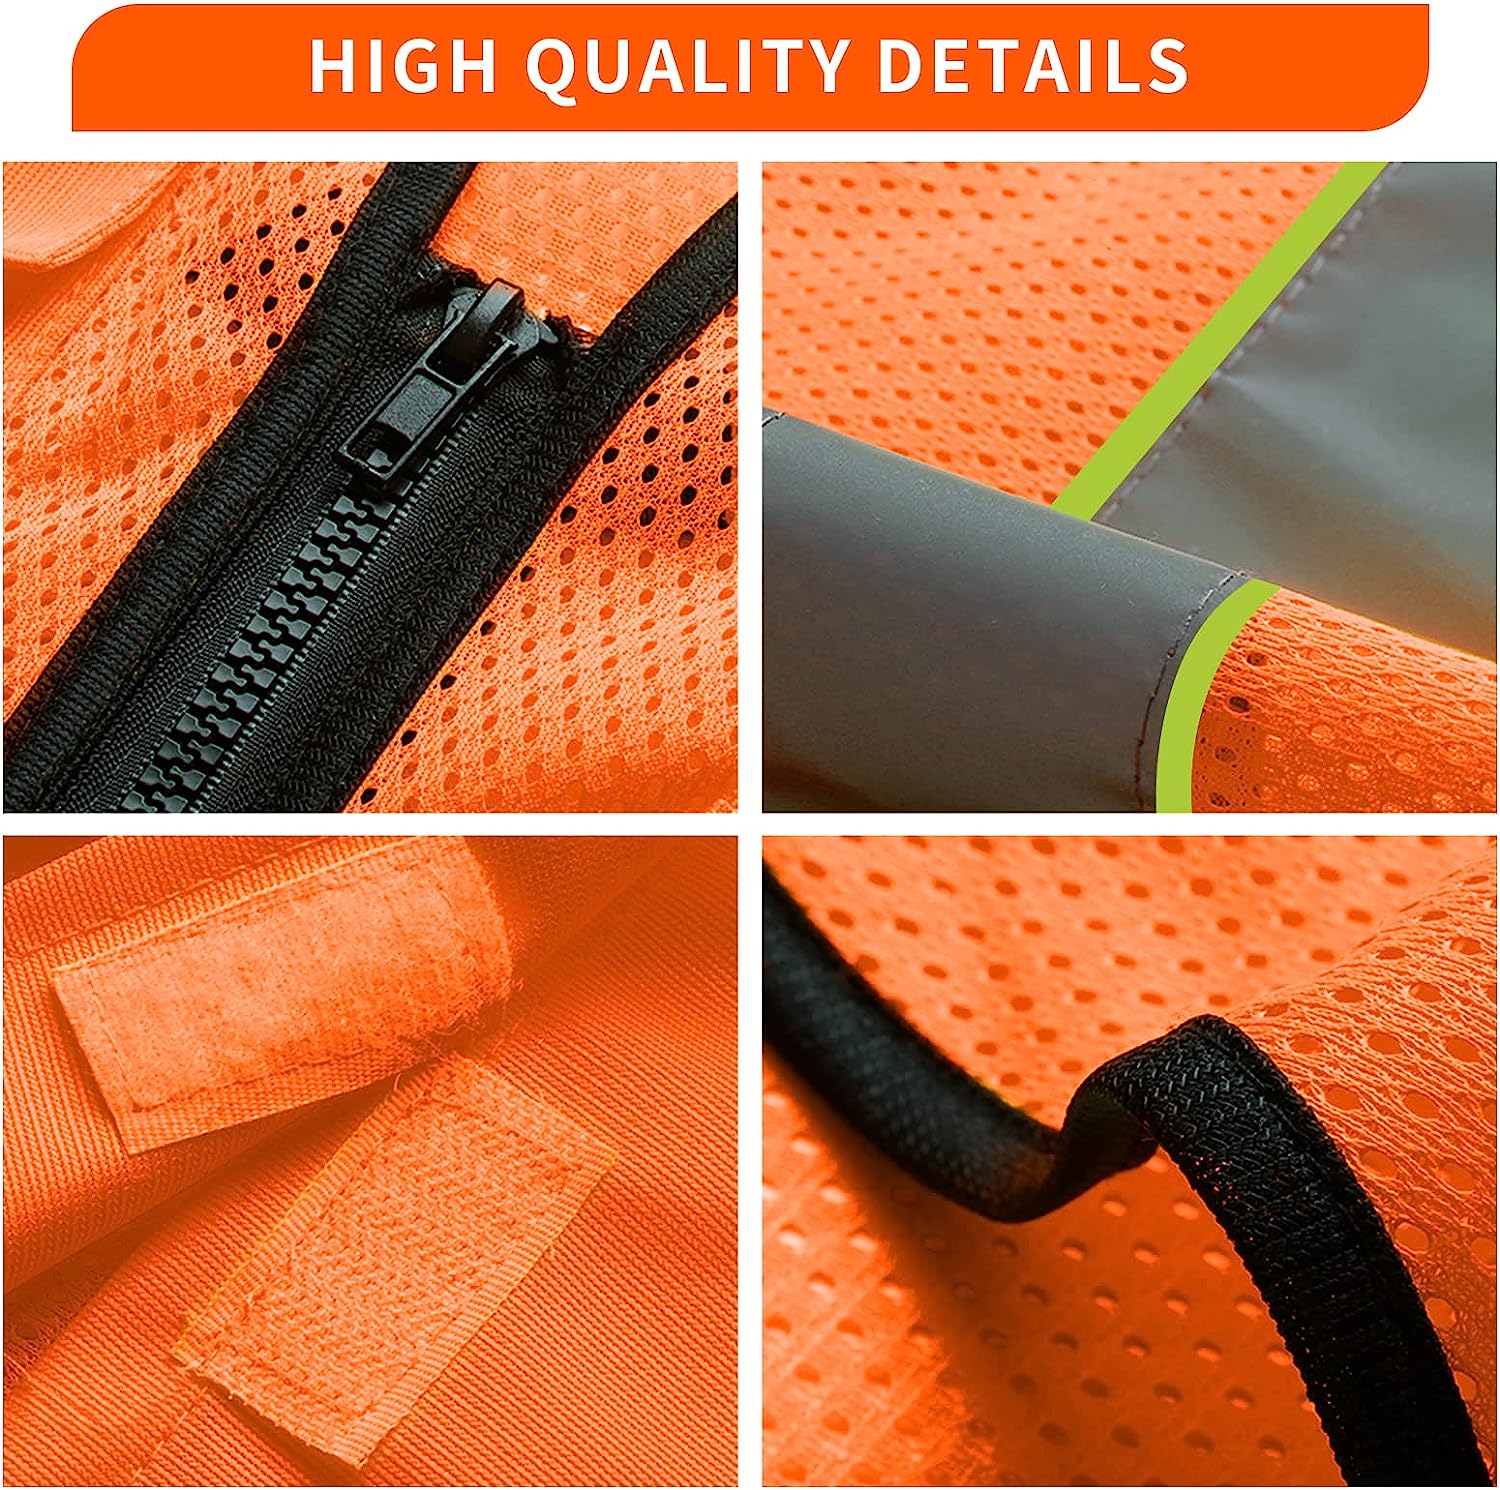 Orange Safety Vest Custom Logo Mesh High Visibility Vest Security Work –  Safety Custom